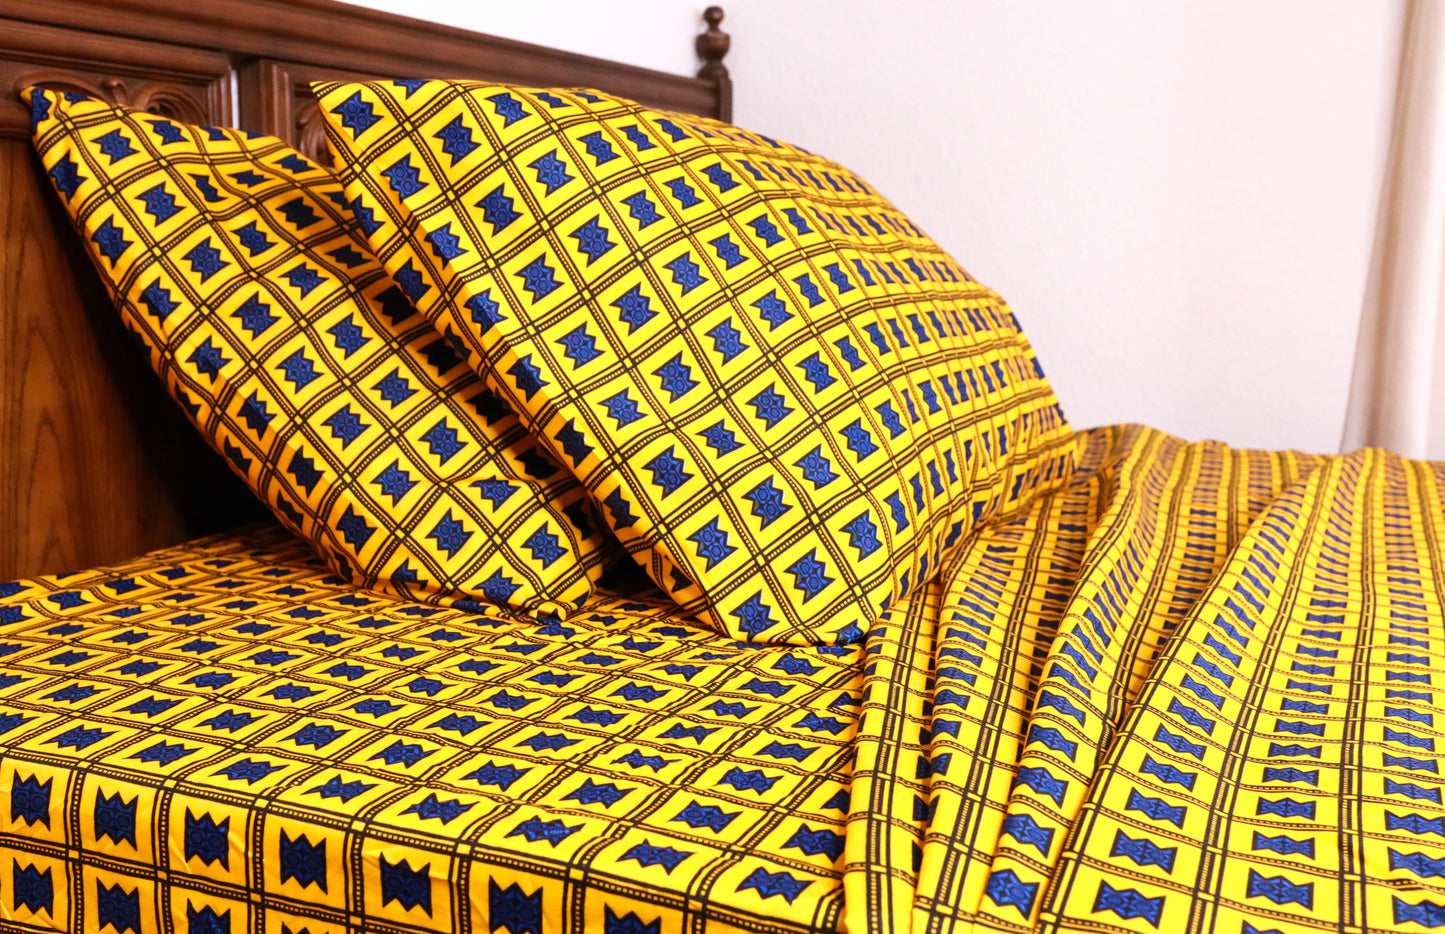 Nile | Luxury Ankara (African Wax Print) Bed Sheet Sets